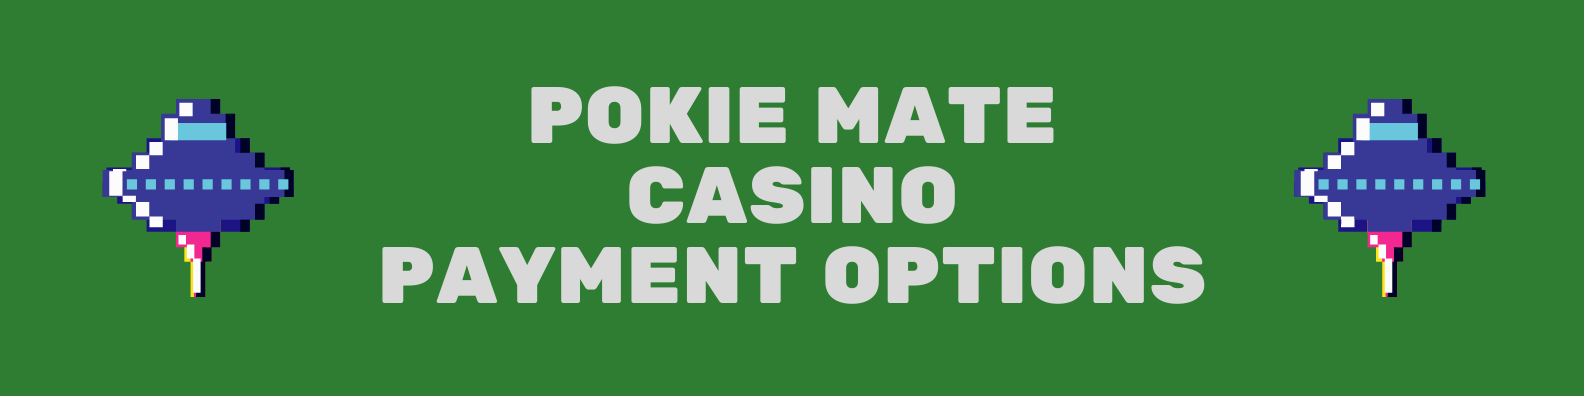 Pokie Mate Casino Payment Options